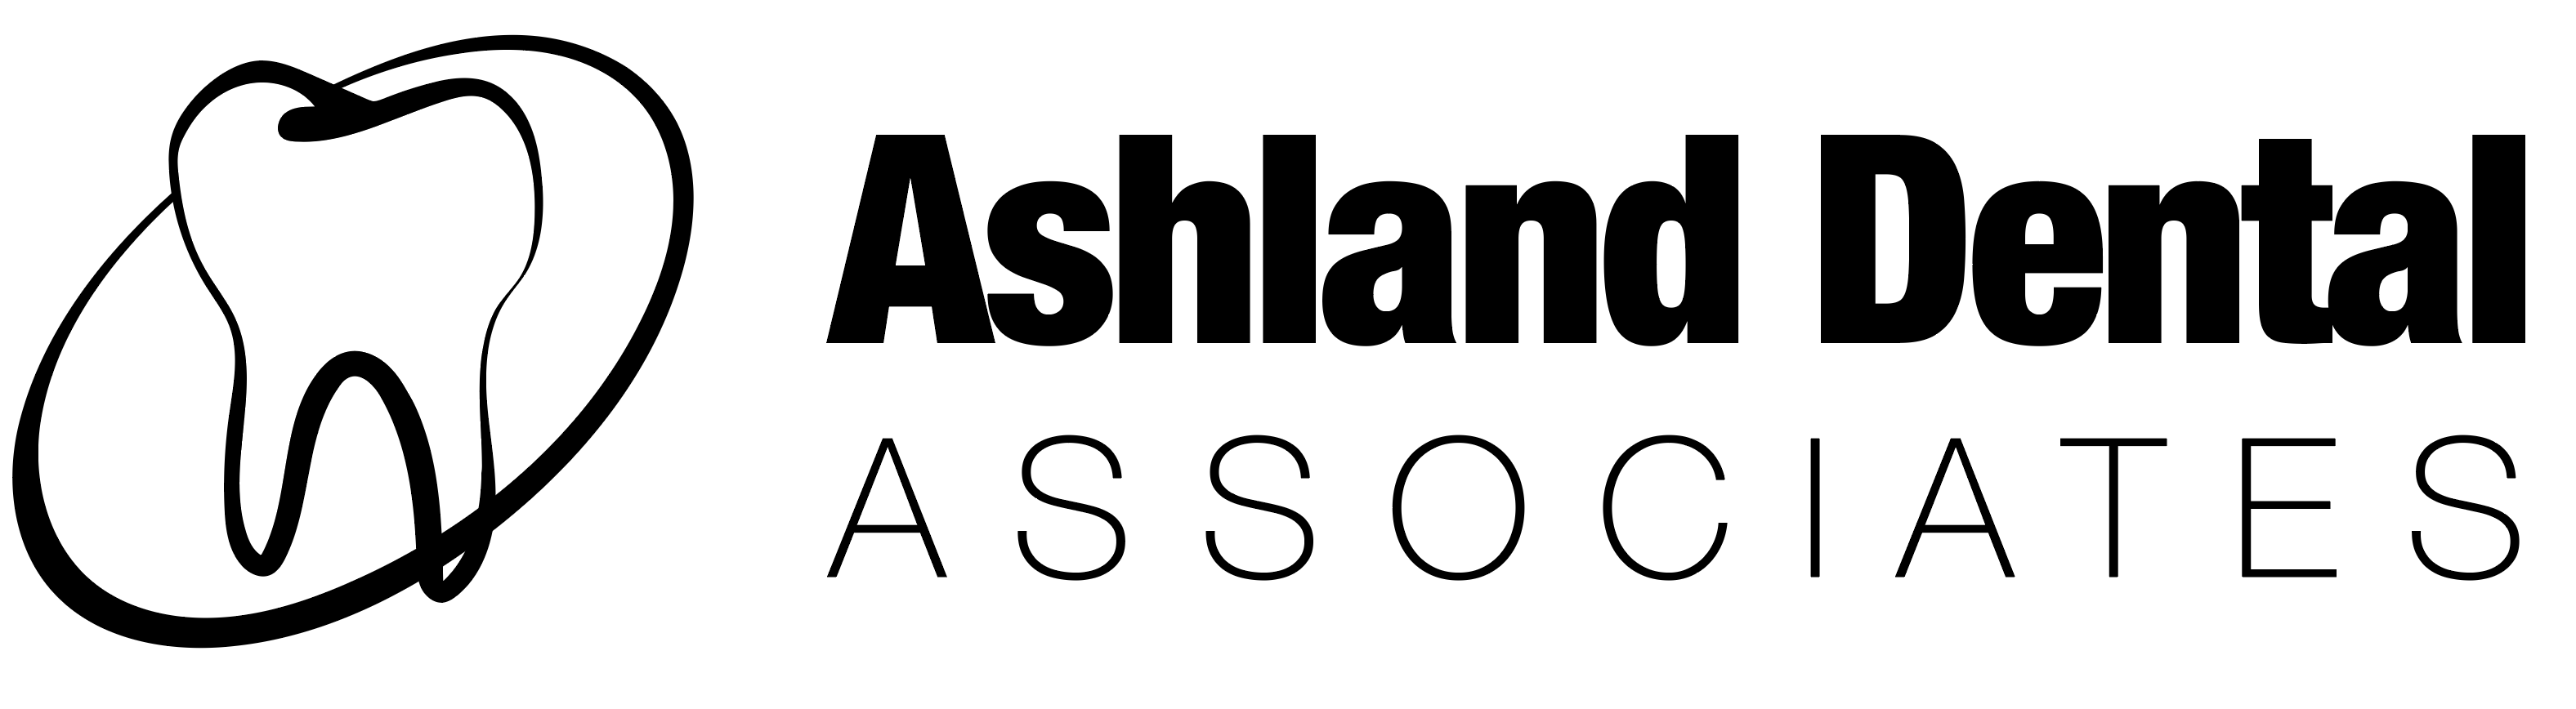 Ashland Dental Associates